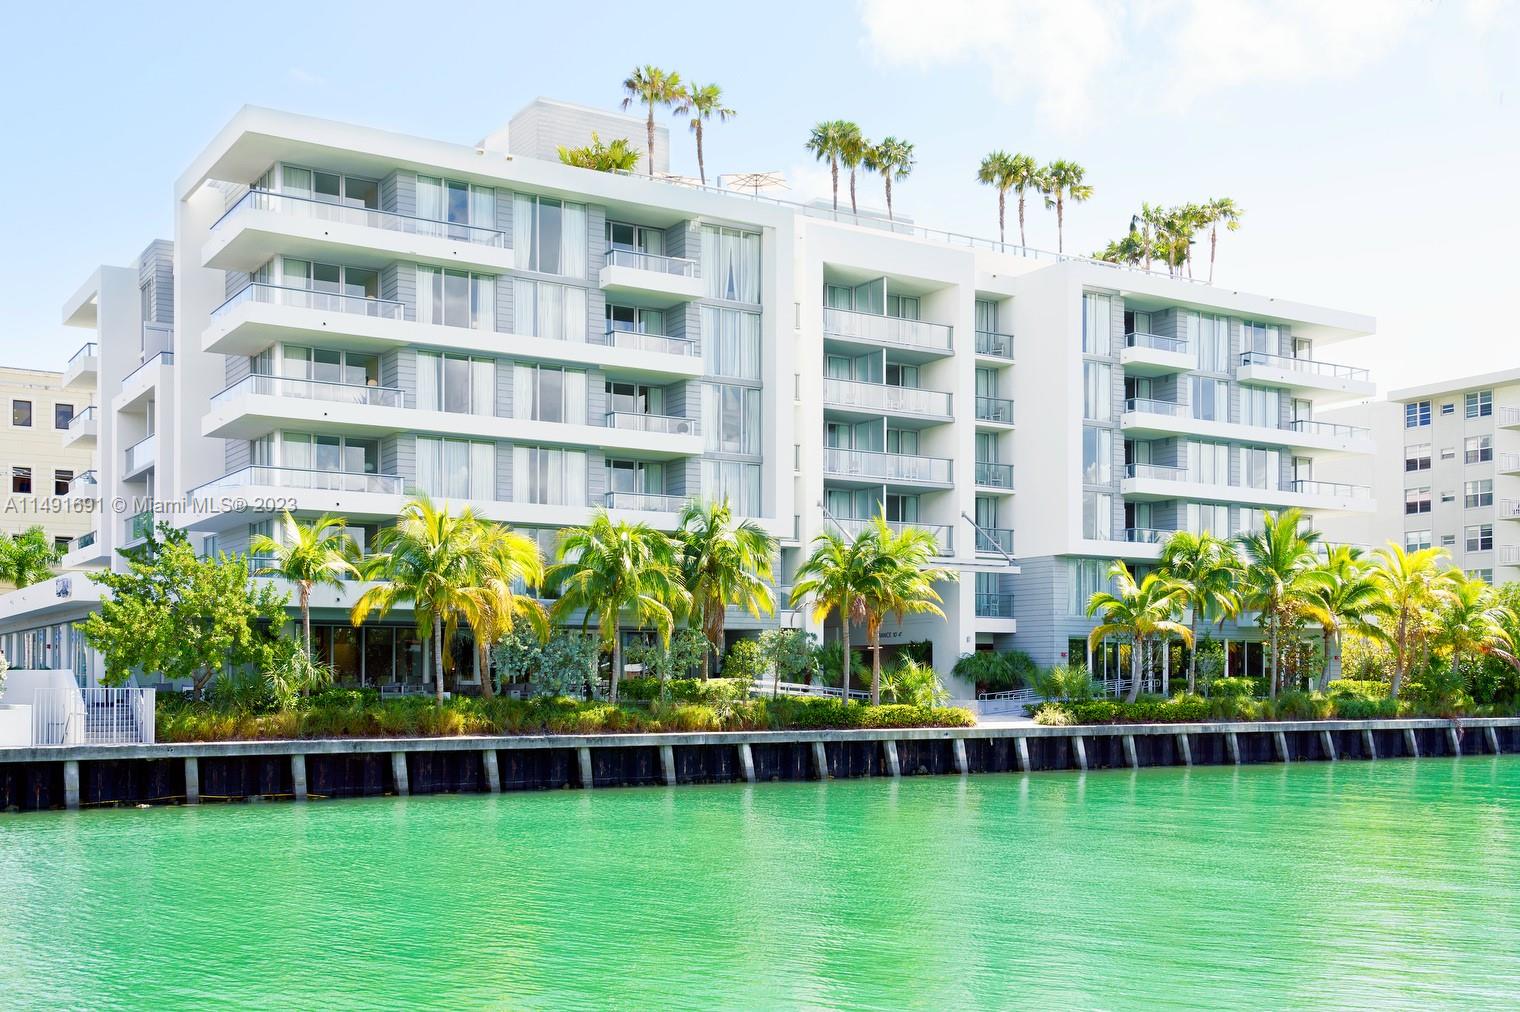 Property for Sale at 9540 W Bay Harbor Dr 301-1, Bay Harbor Islands, Miami-Dade County, Florida - Bedrooms: 1 
Bathrooms: 2  - $575,000